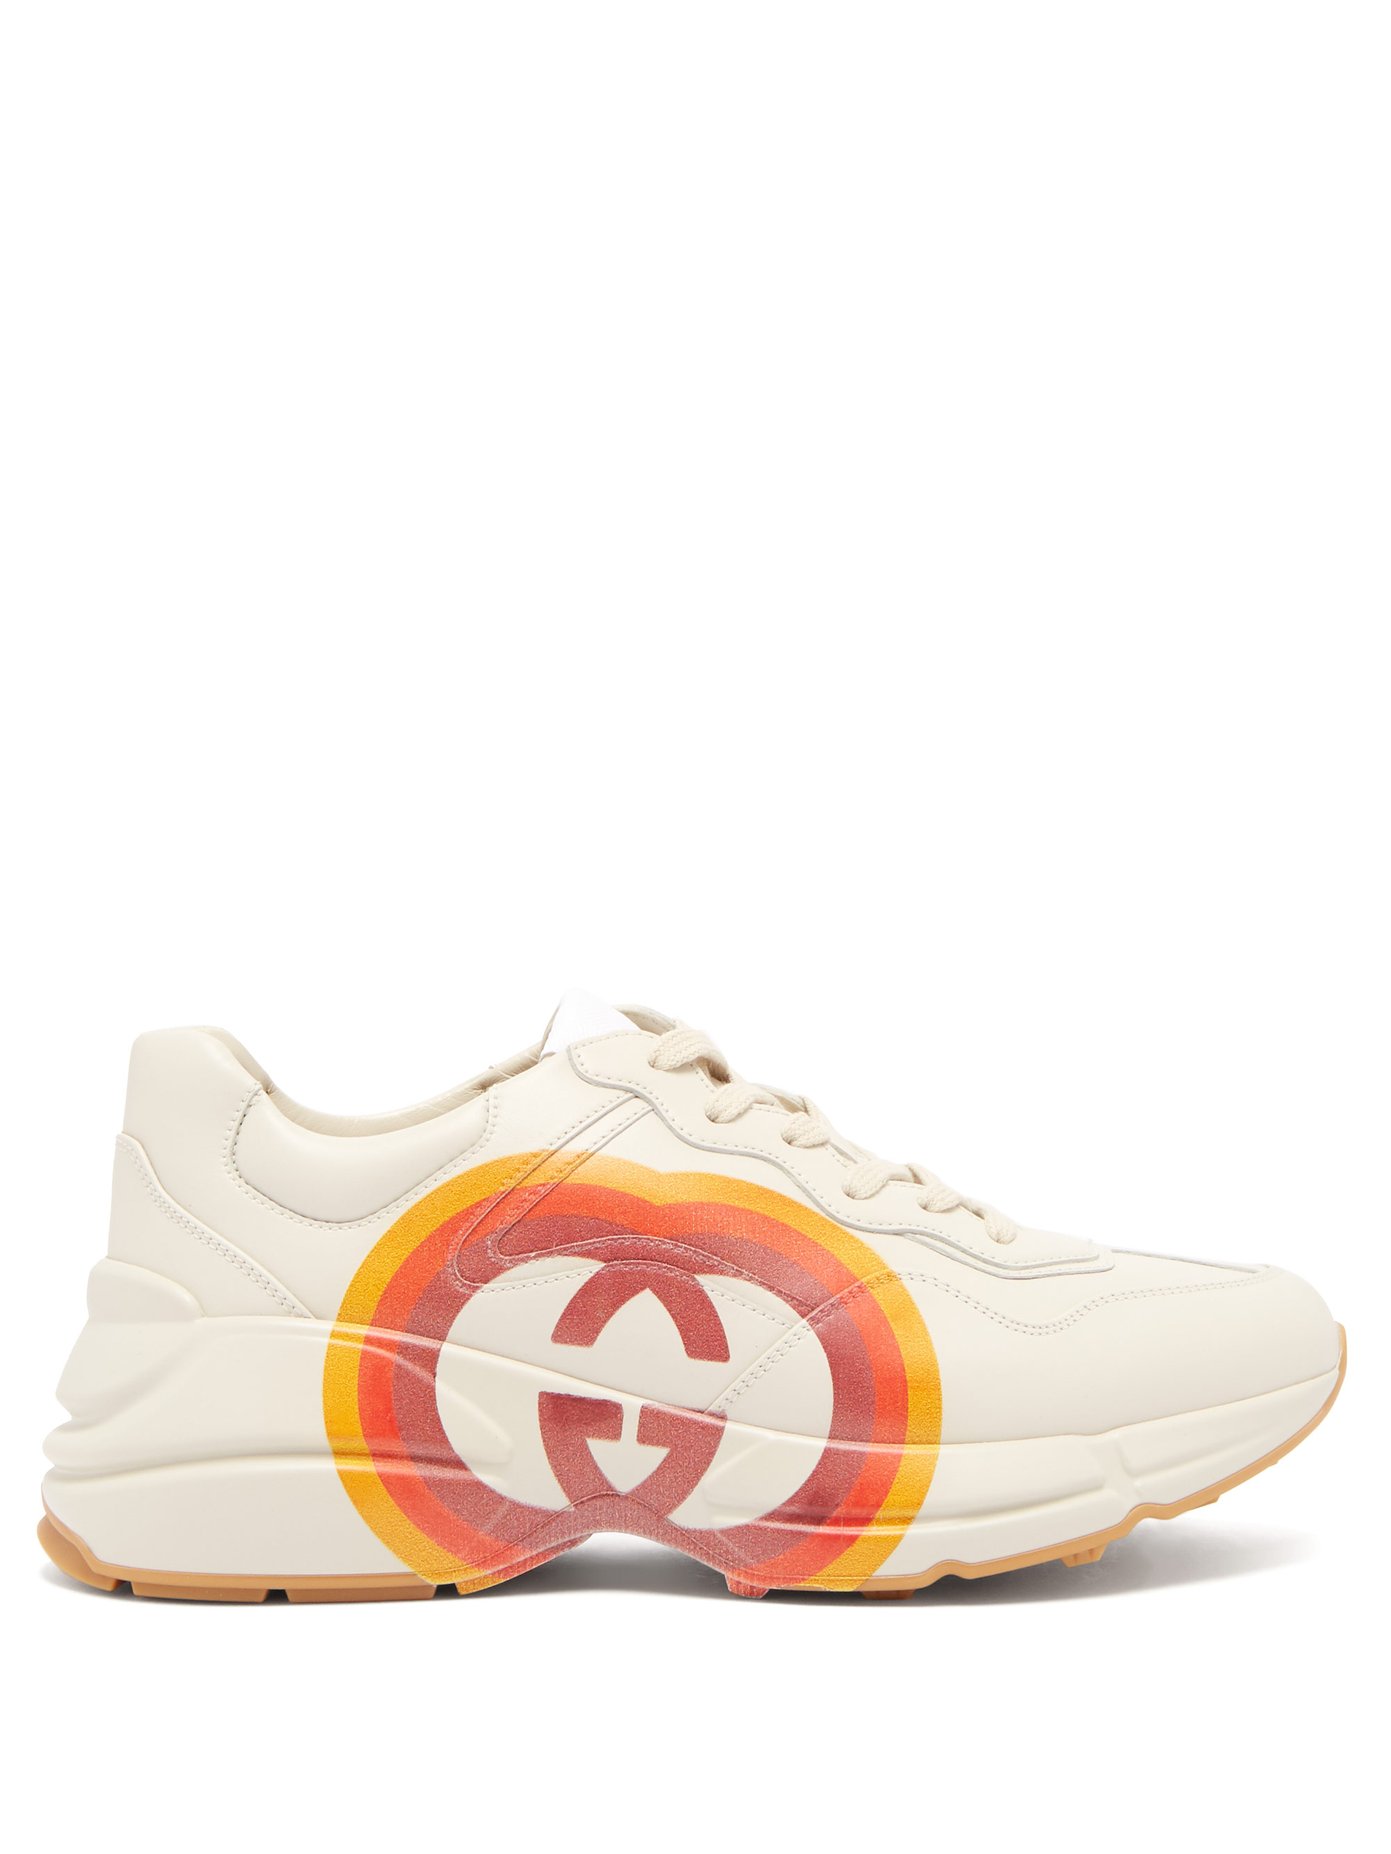 gucci shoes gg print